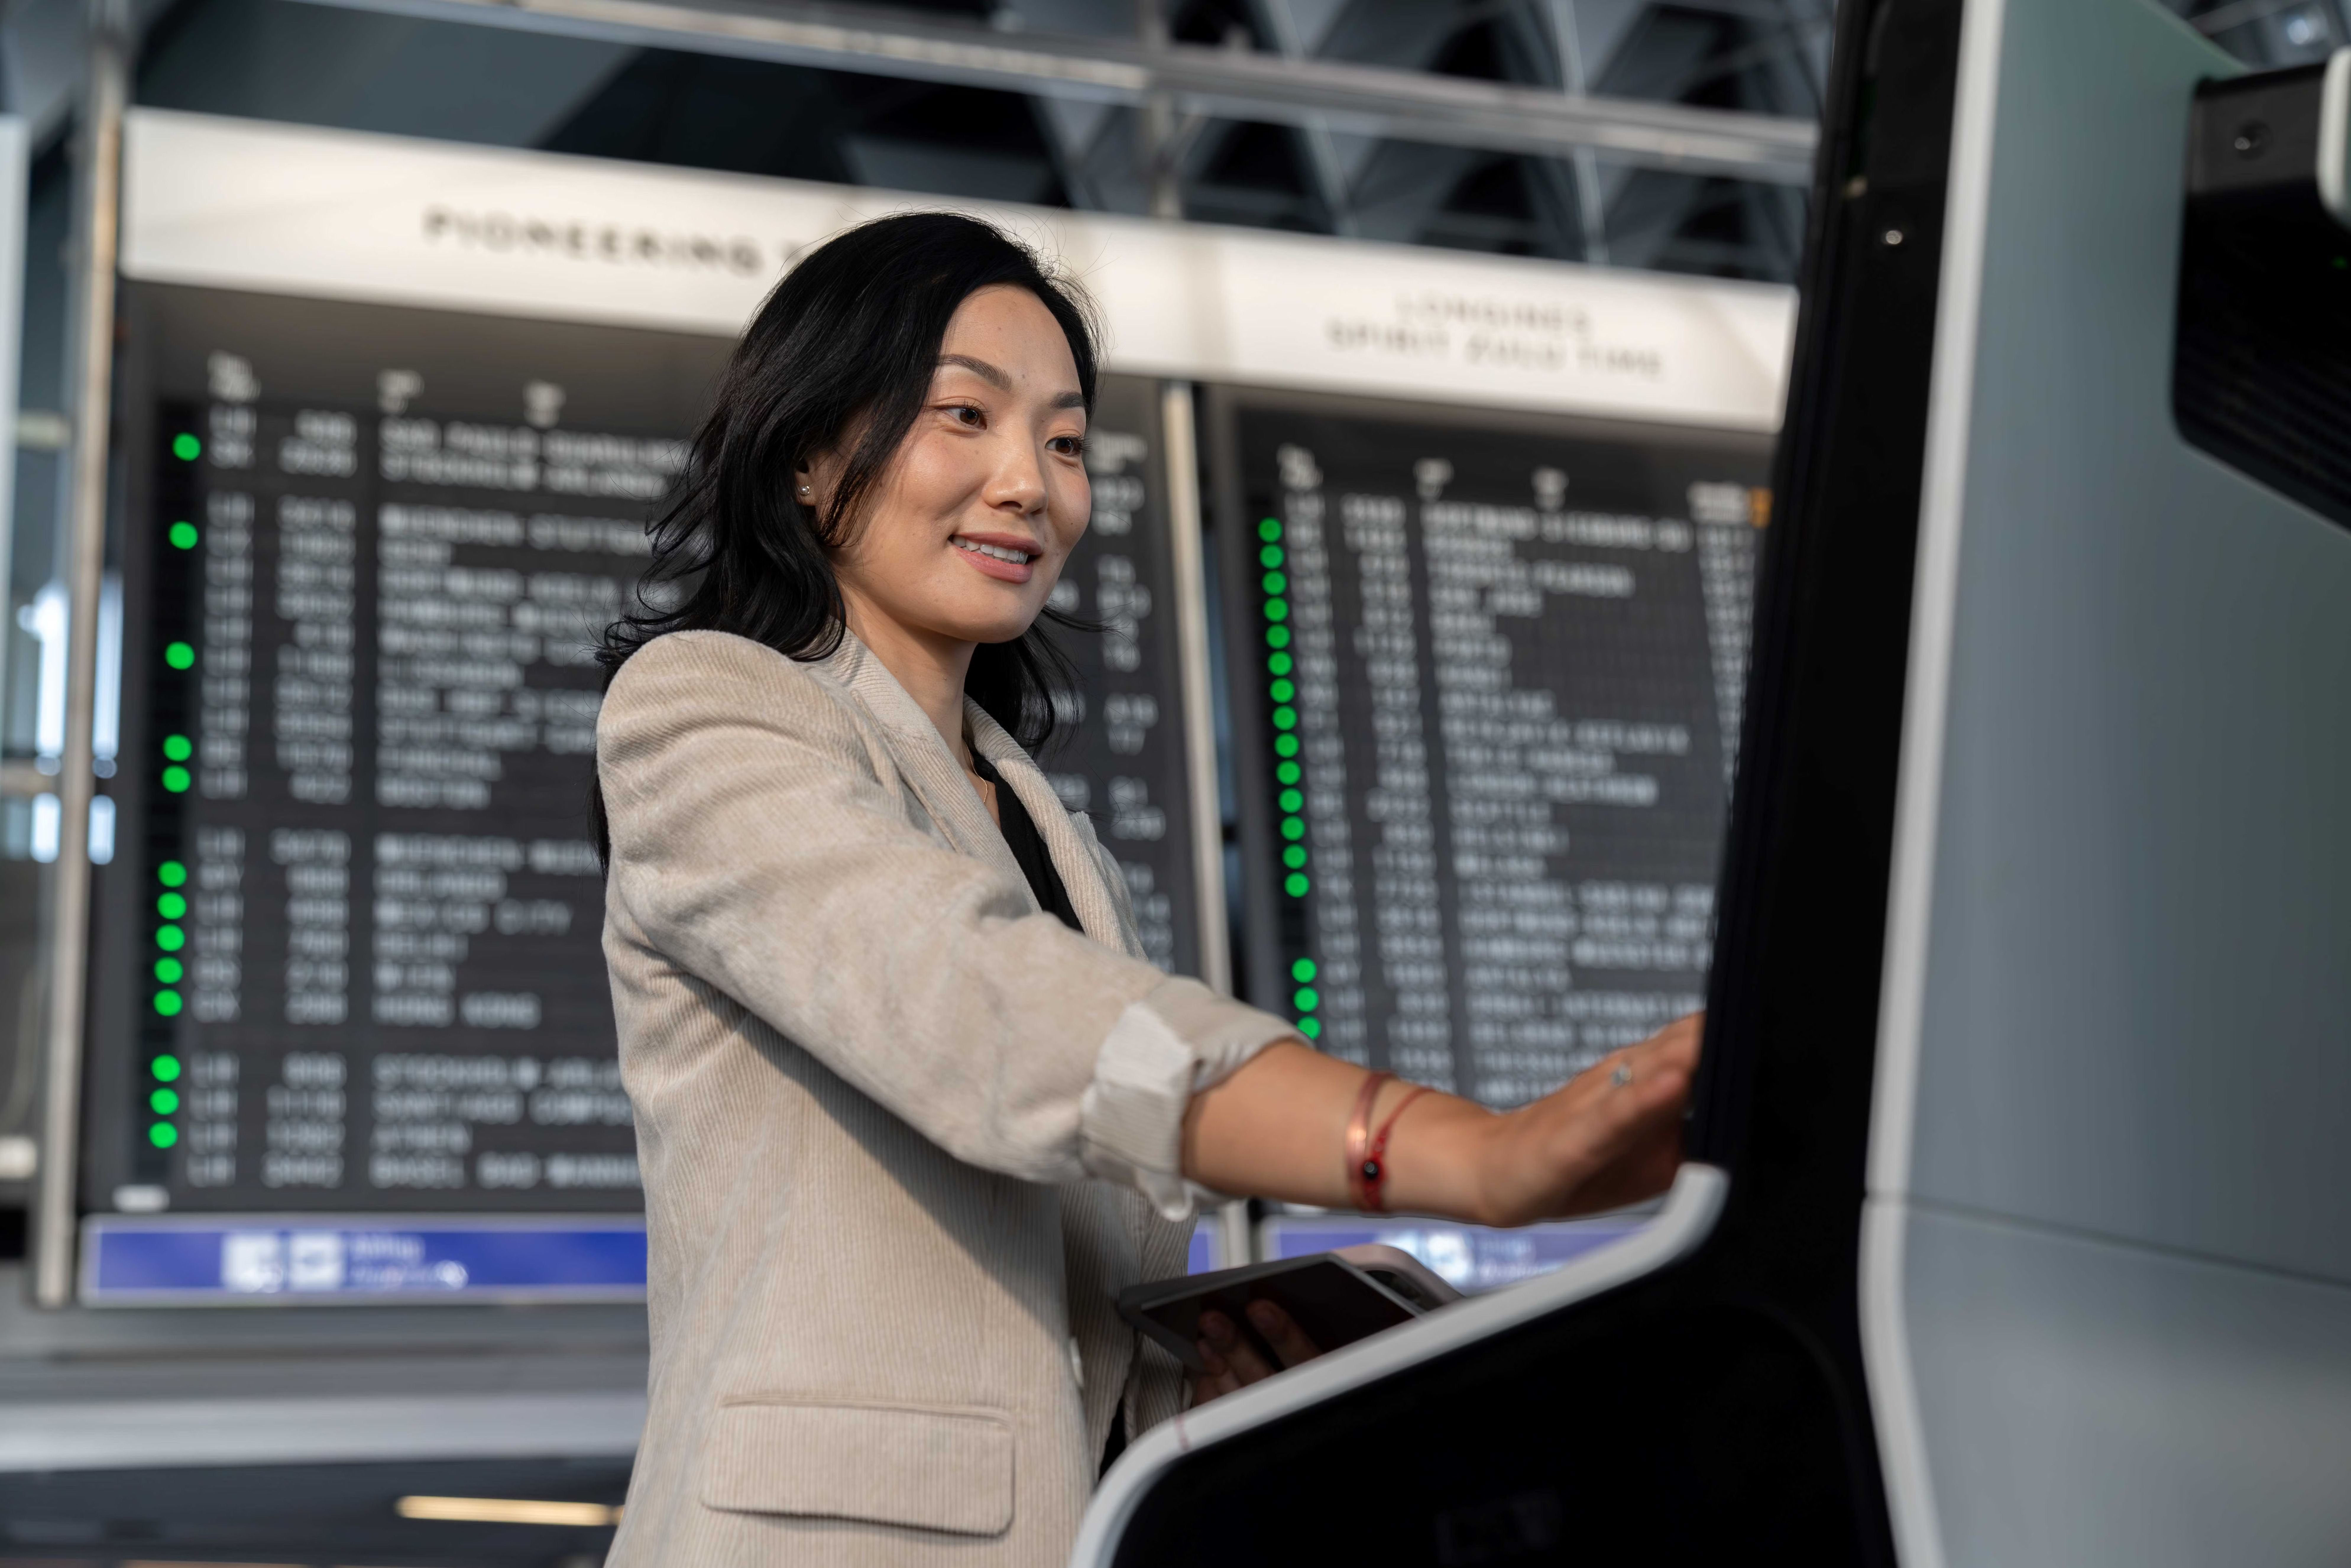 Fraport SITA Biometrics